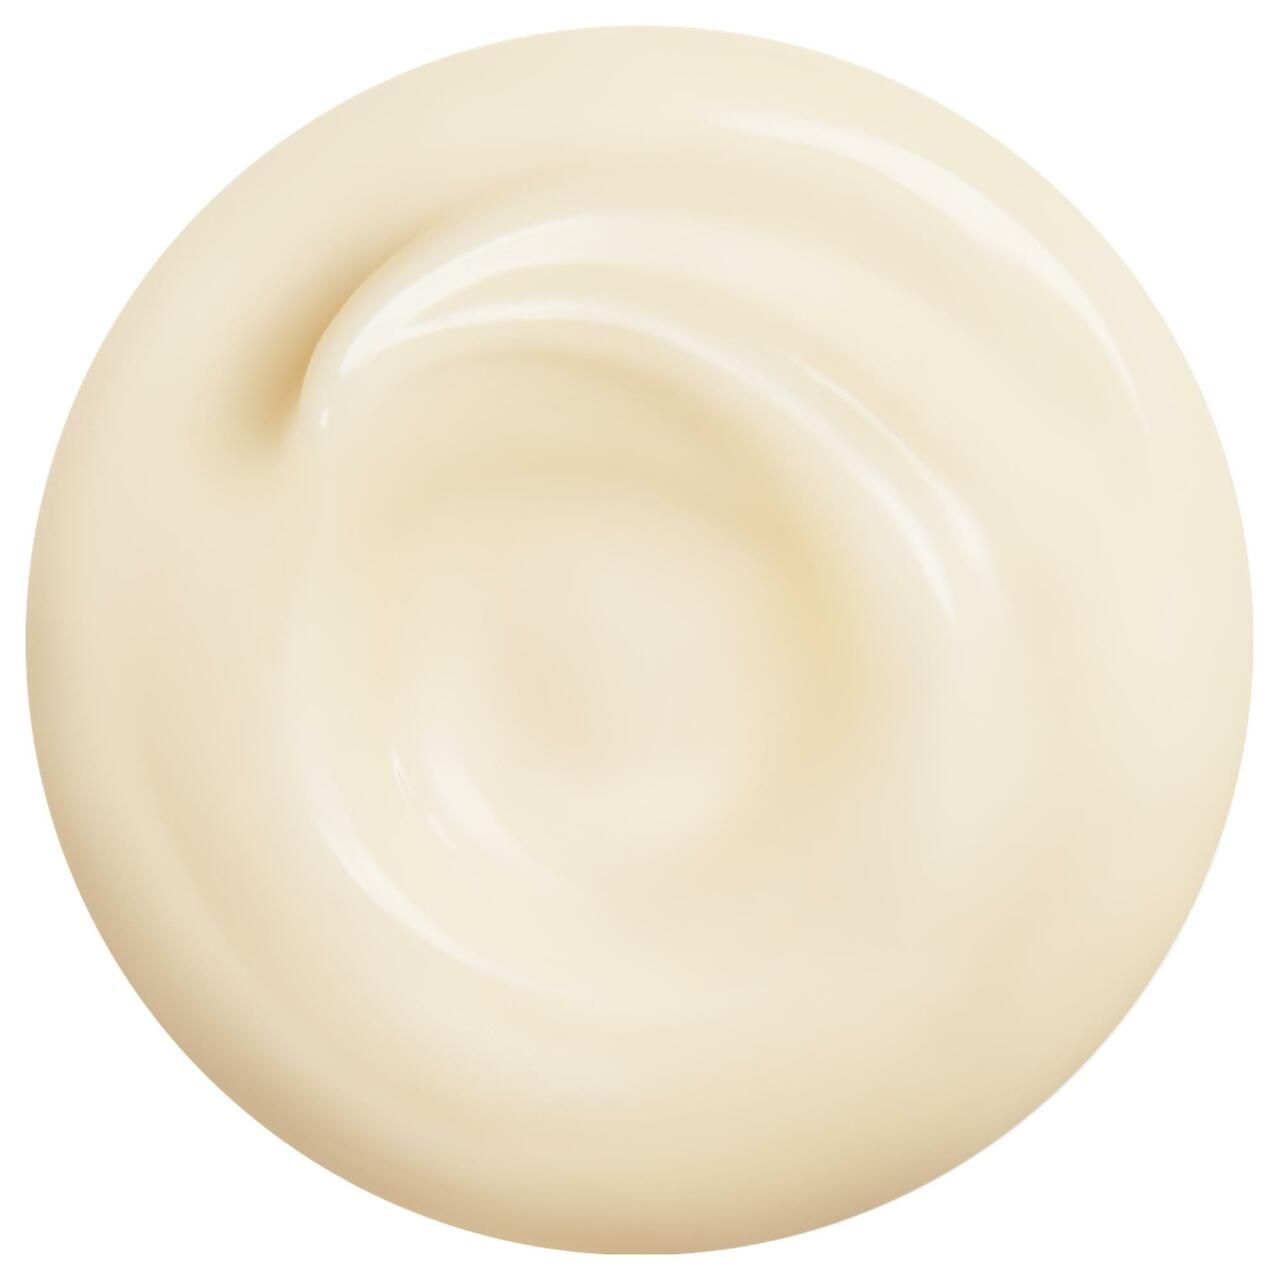 Shiseido, Benefiance Wrinkle Smoothing Cream Enriched